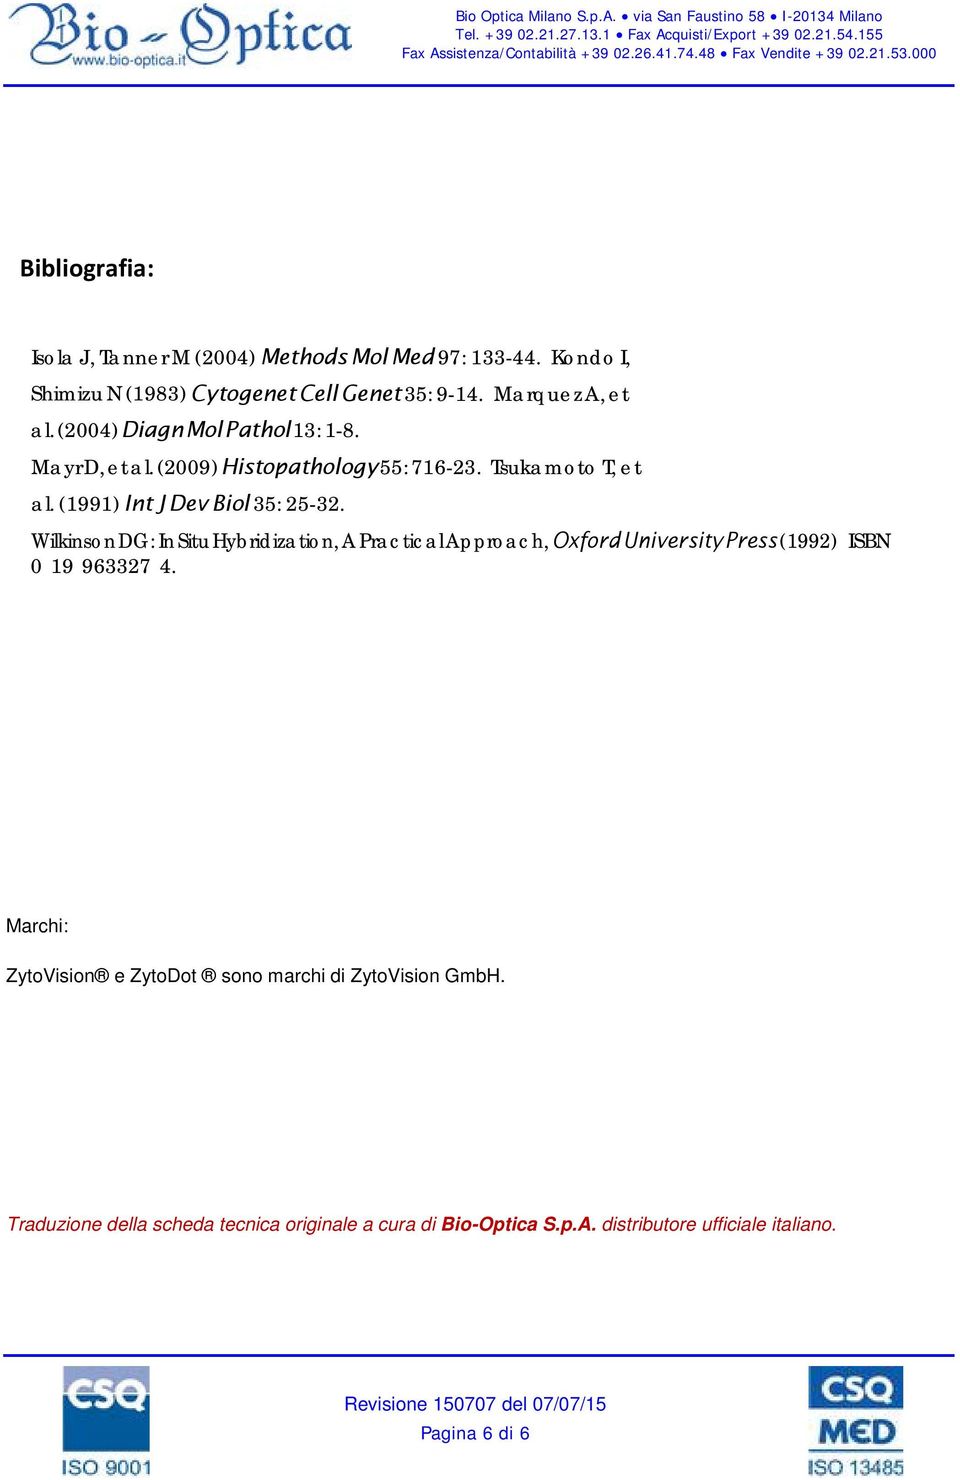 (2009) Histopathology 55: 716-23. Tsukamoto T, et al. (1991) Int J Dev Biol 35: 25-32. Wilkinson DG: In Situ Hybridization, A Practical Approach, Oxford University Press (1992) ISBN 0 19 963327 4.